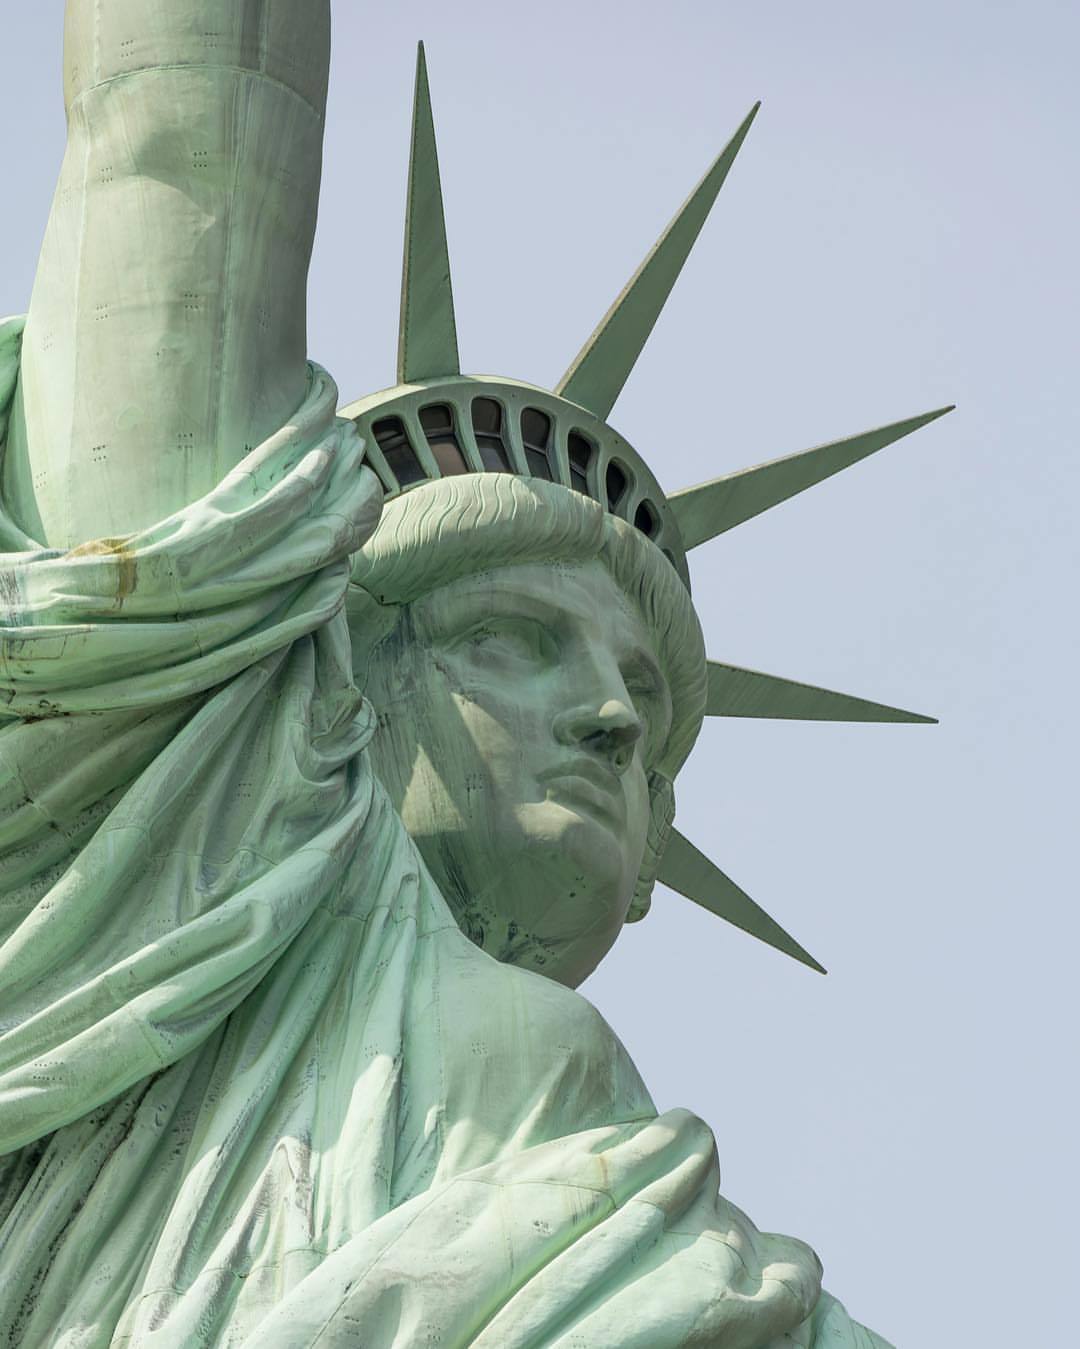 newyorkcityfeelings:
“Radiant Lady Liberty by @chief770
”